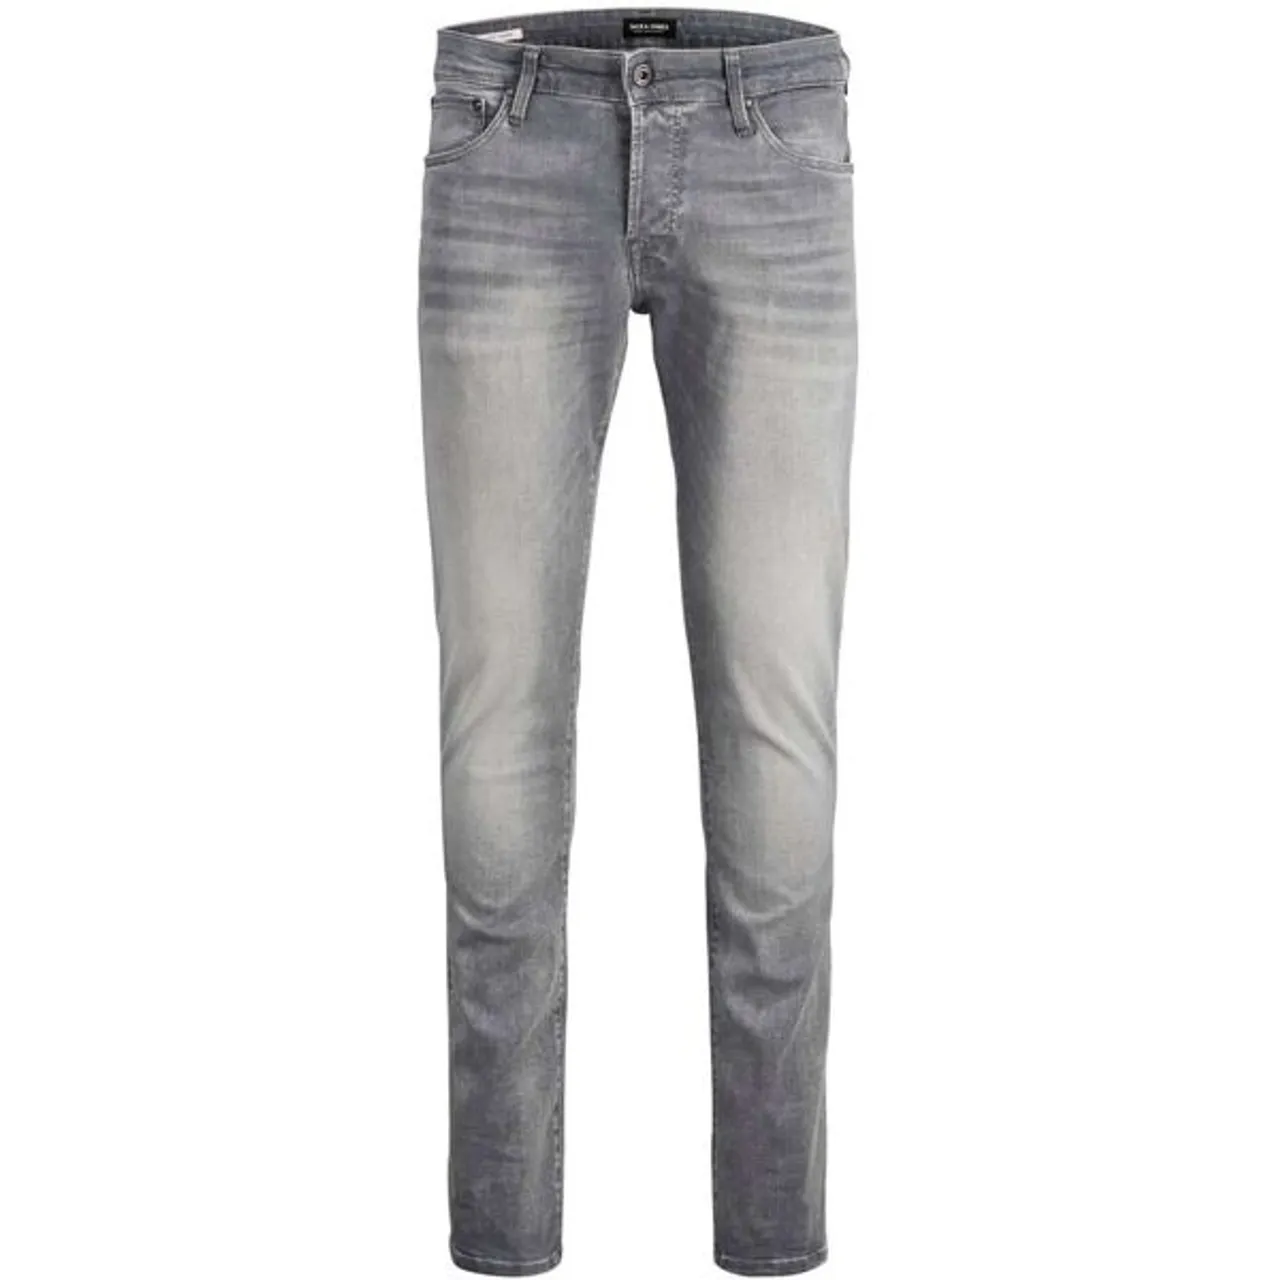 Slim-fit-Jeans JACK & JONES "GLENN ICON" Gr. 34, Länge 36, grau (grey denim) Herren Jeans Slim Fit